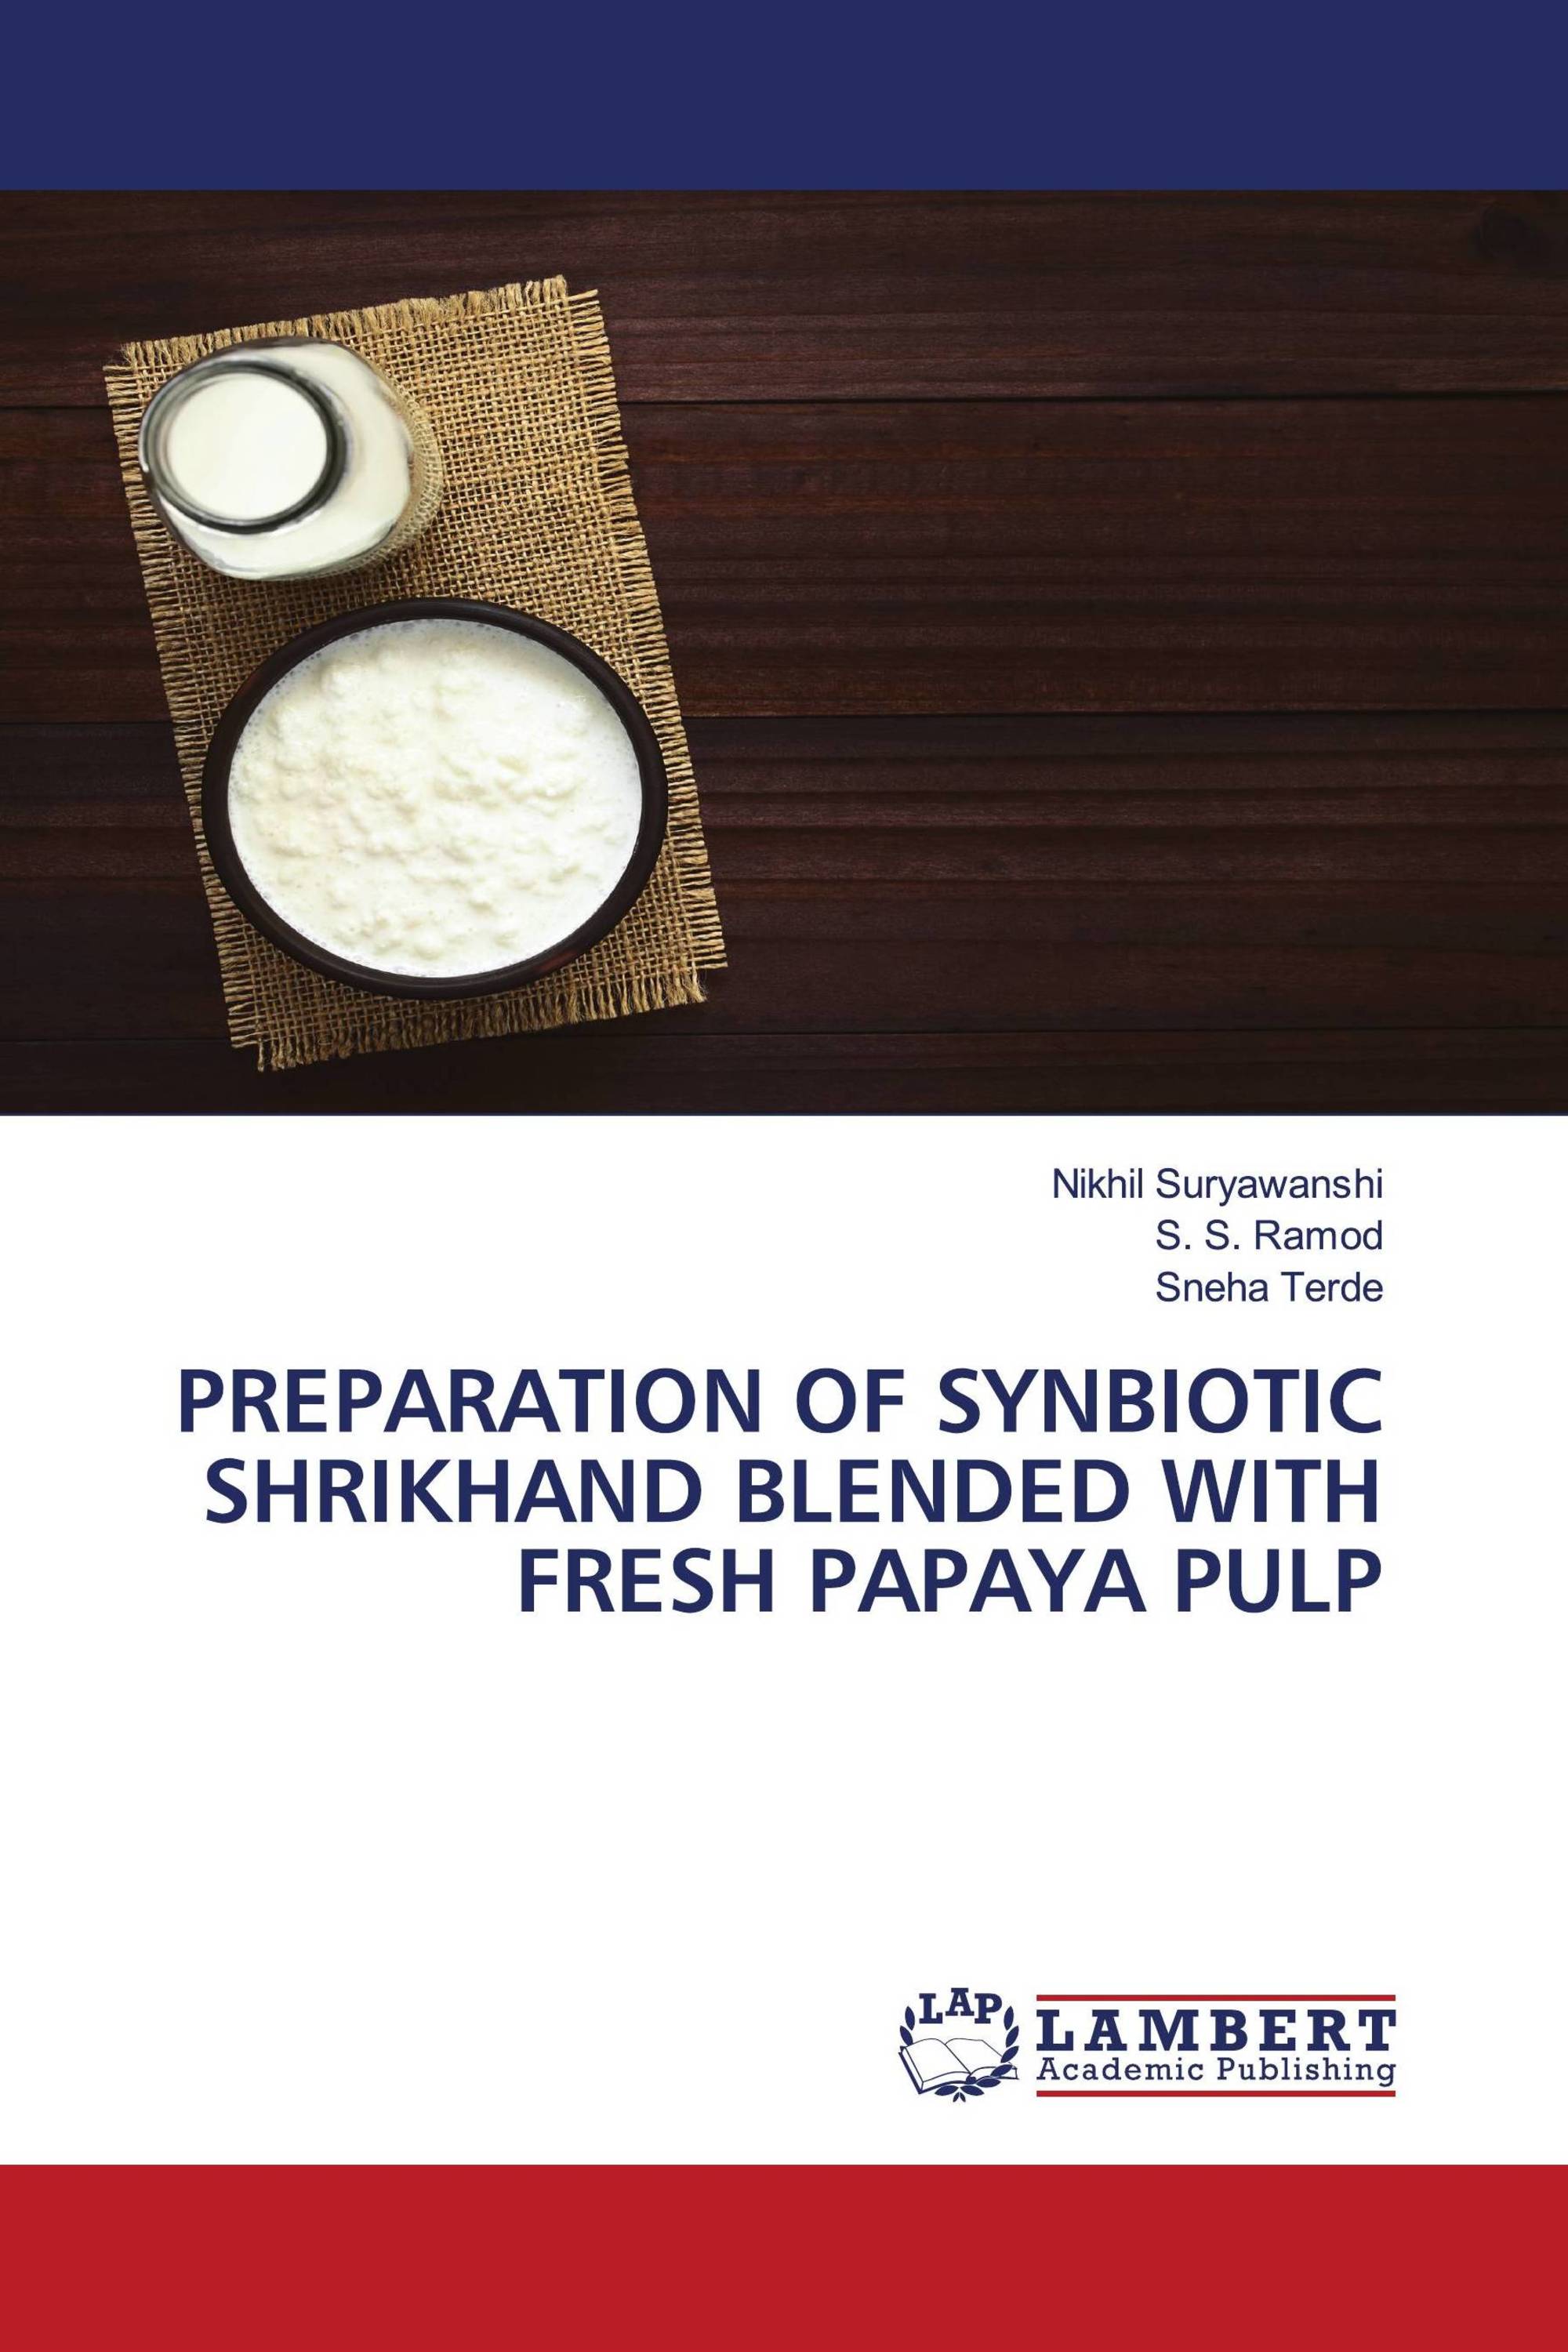 PREPARATION OF SYNBIOTIC SHRIKHAND BLENDED WITH FRESH PAPAYA PULP